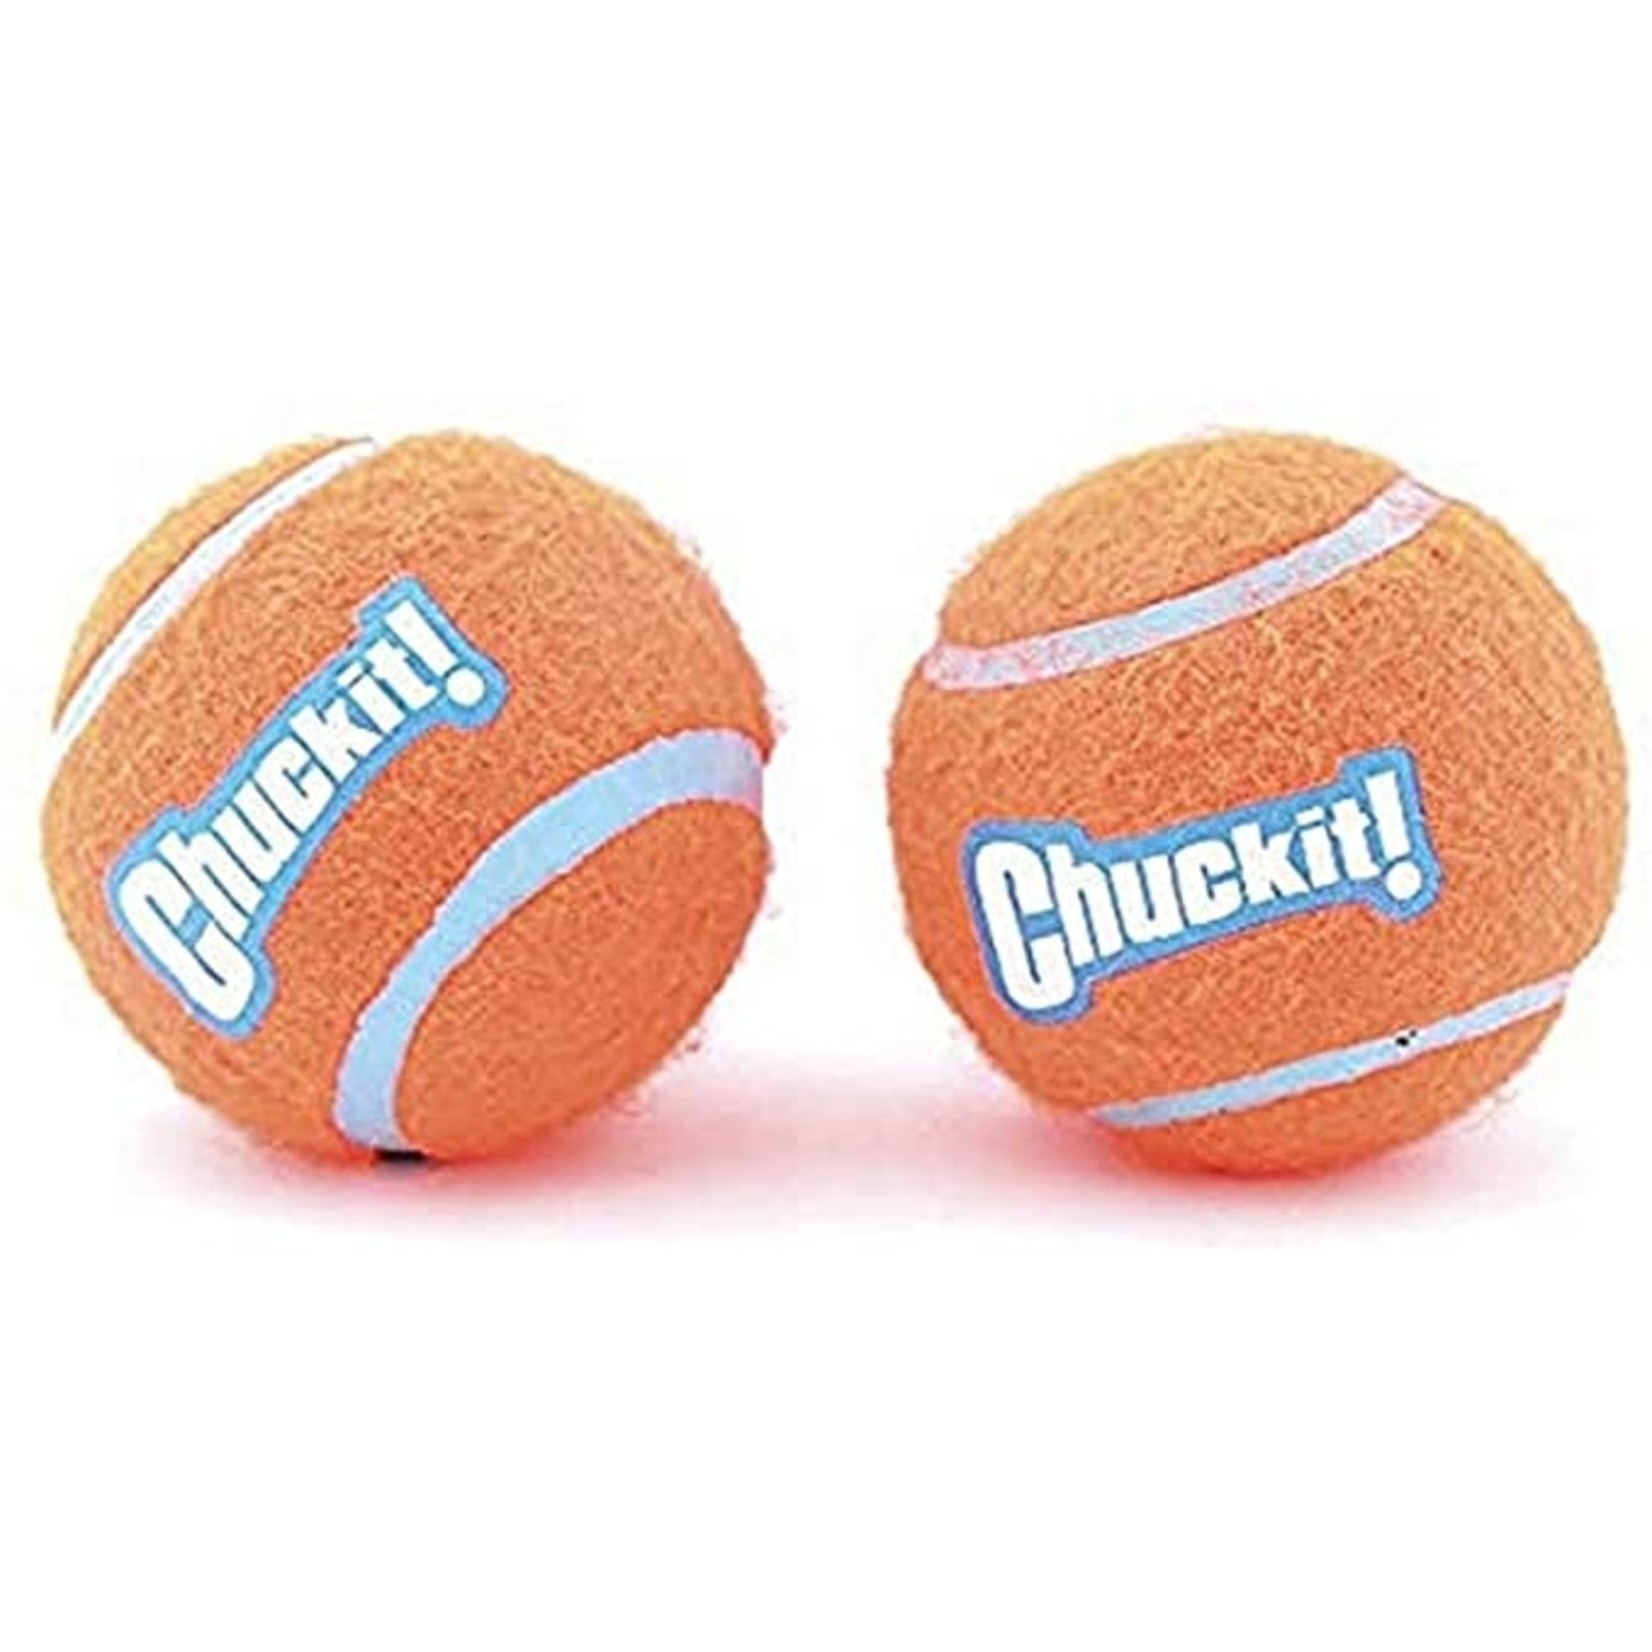 Chuck it Chuck It - Balls